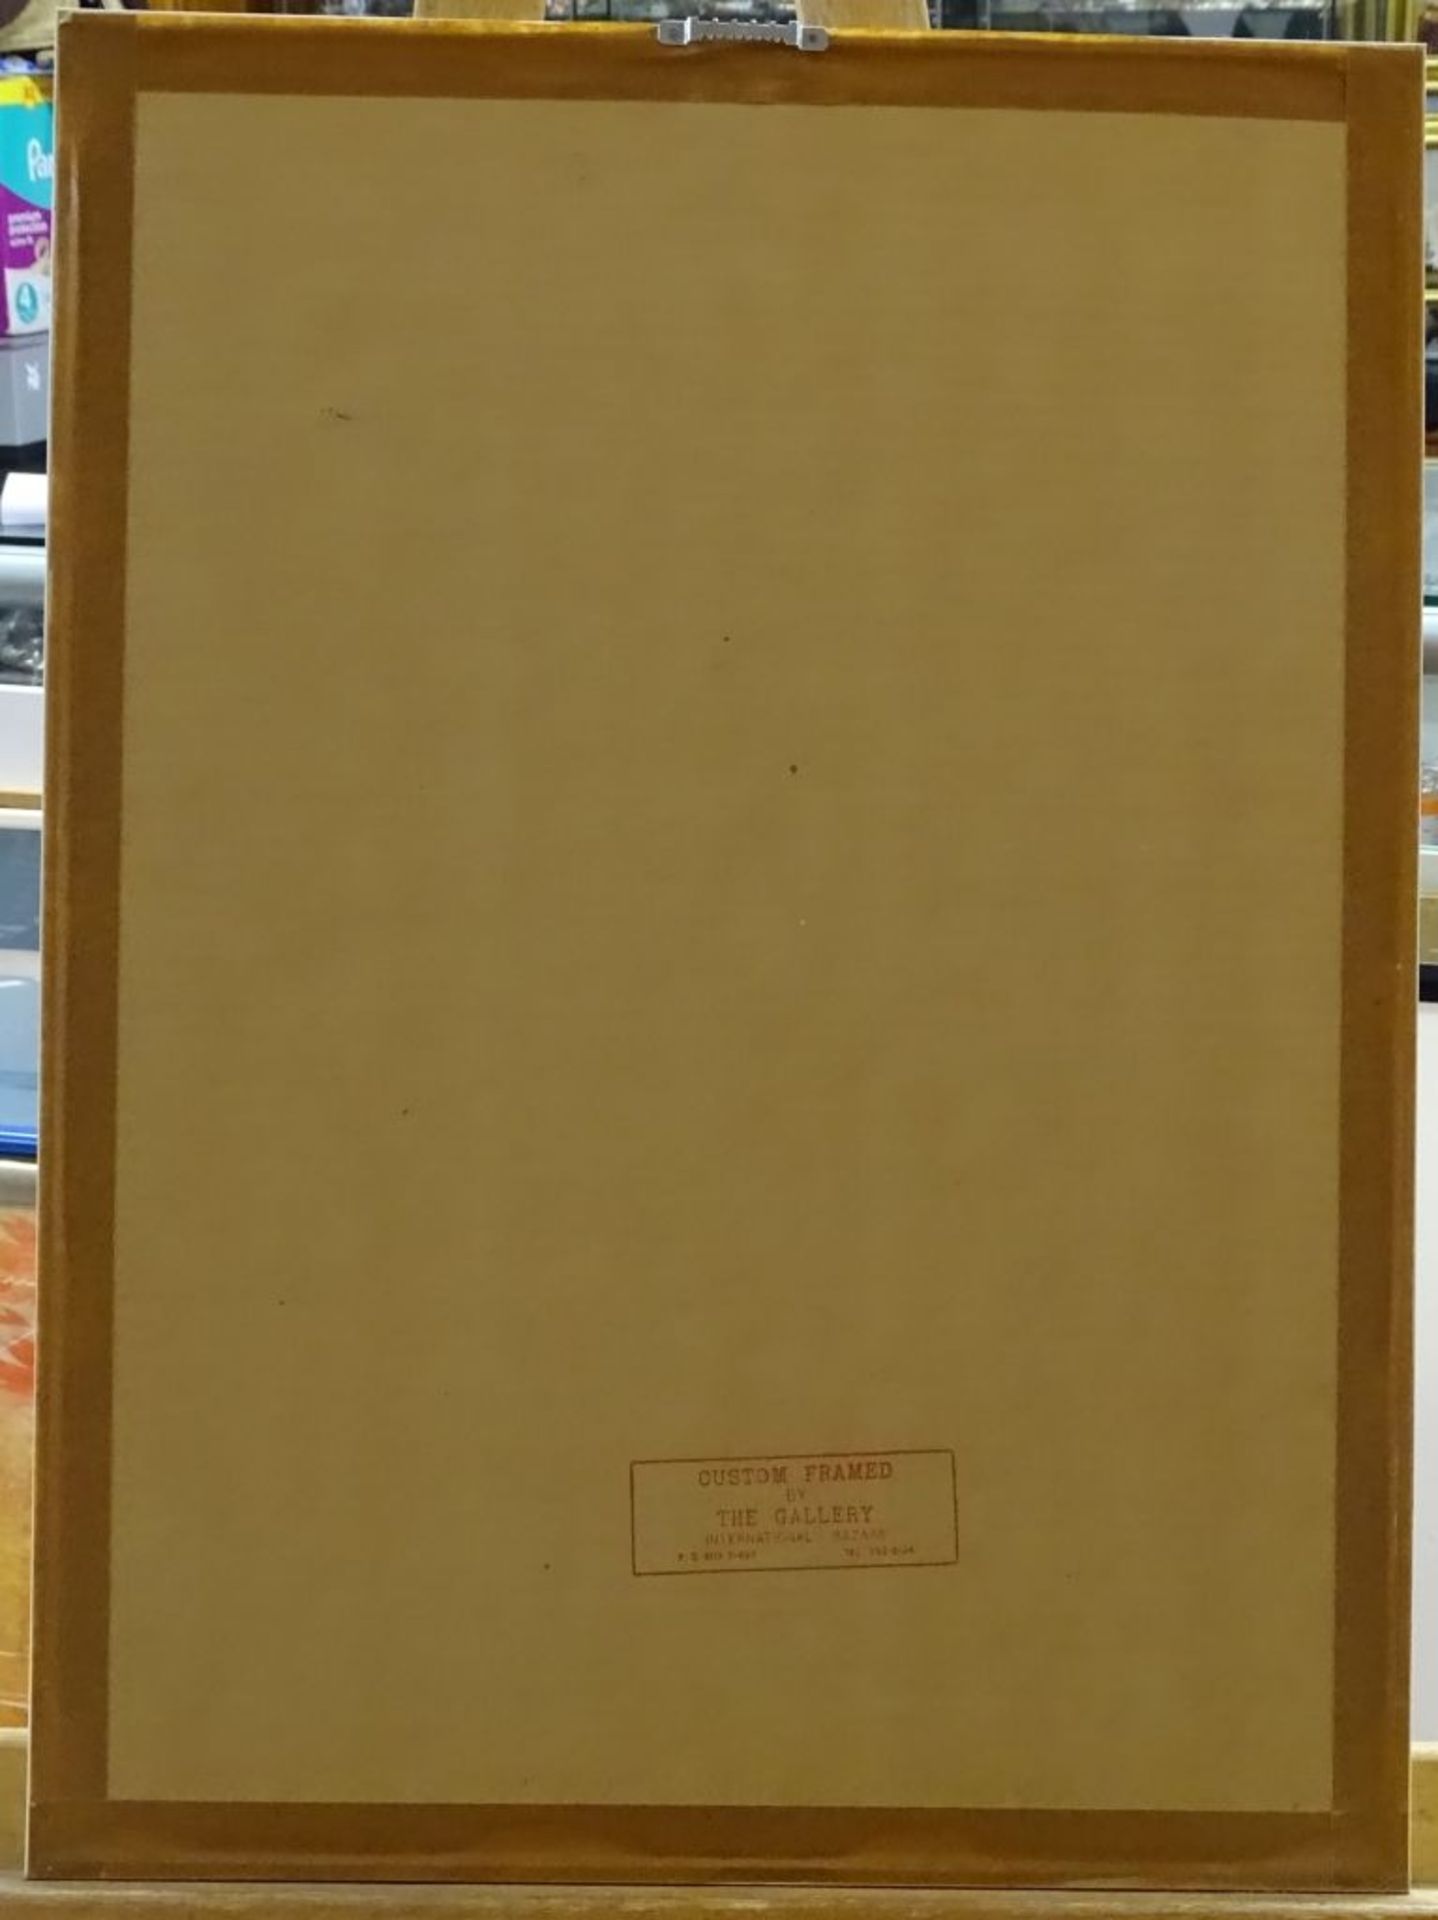 unleserl. sign. moderne Lithografie, 1986, ger/Glas, 60x45,5 cm- - -22.61 % buyer's premium on the - Bild 4 aus 4